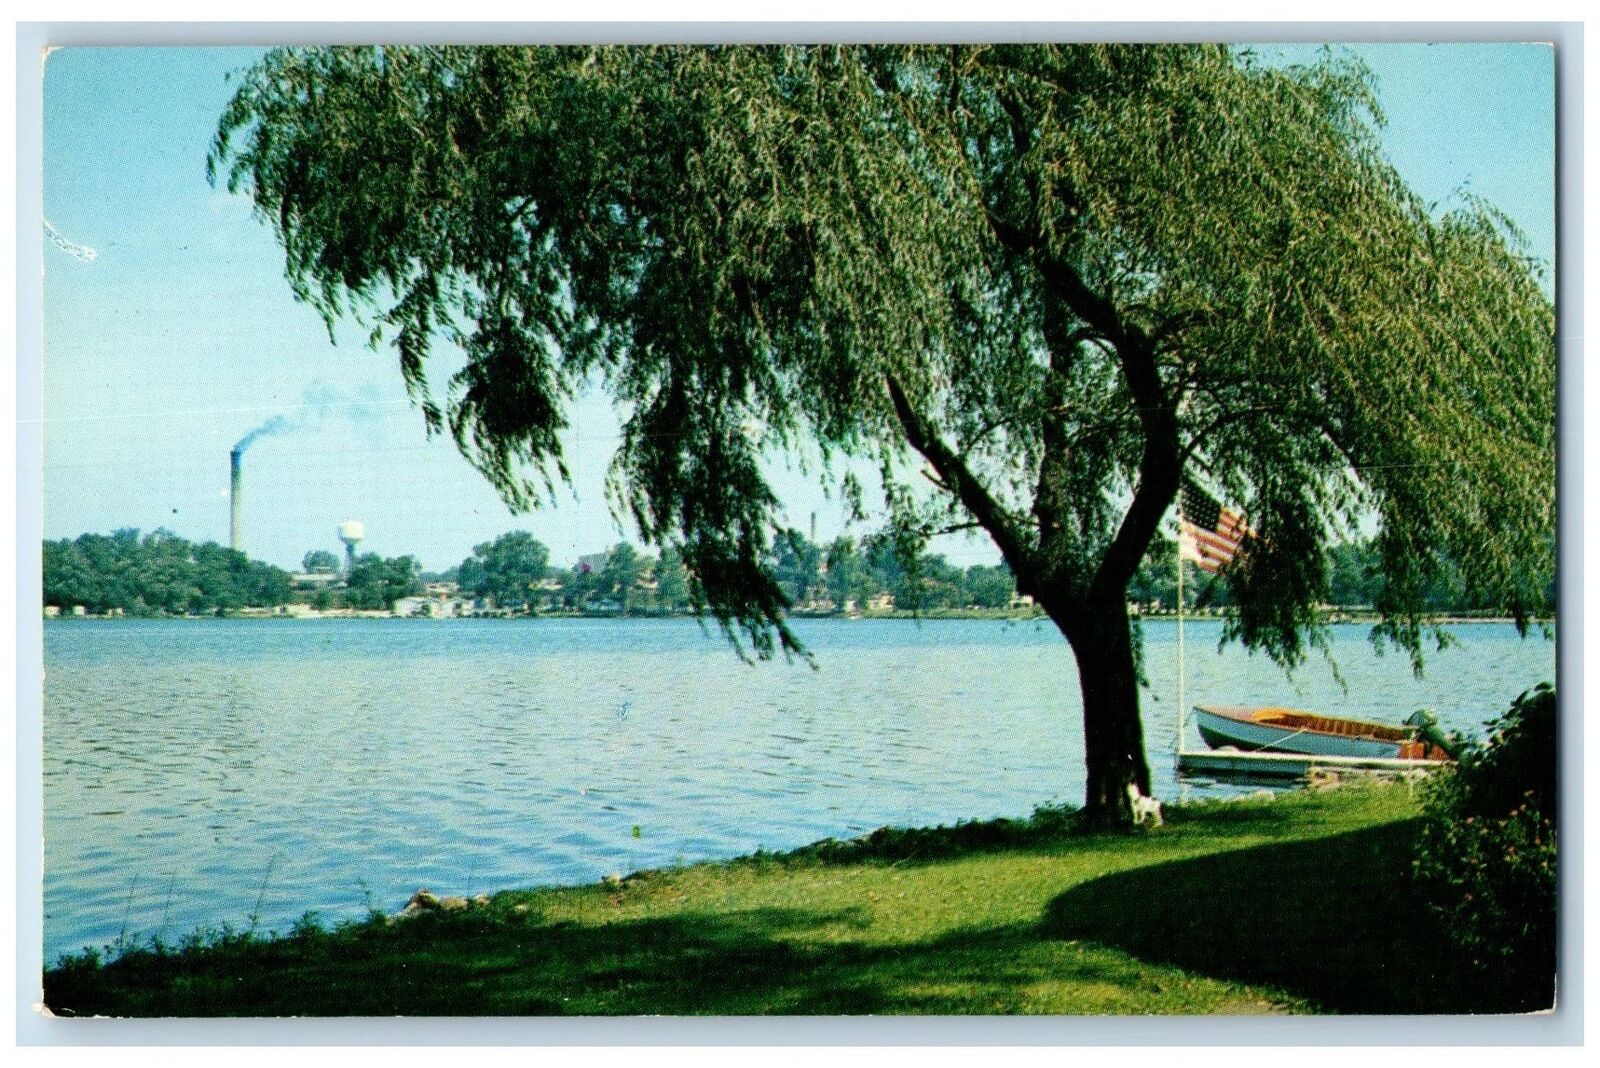 Warsaw Indiana IN Postcard Lake Winona Trees Canoe Boat Flag c1960's Vintage